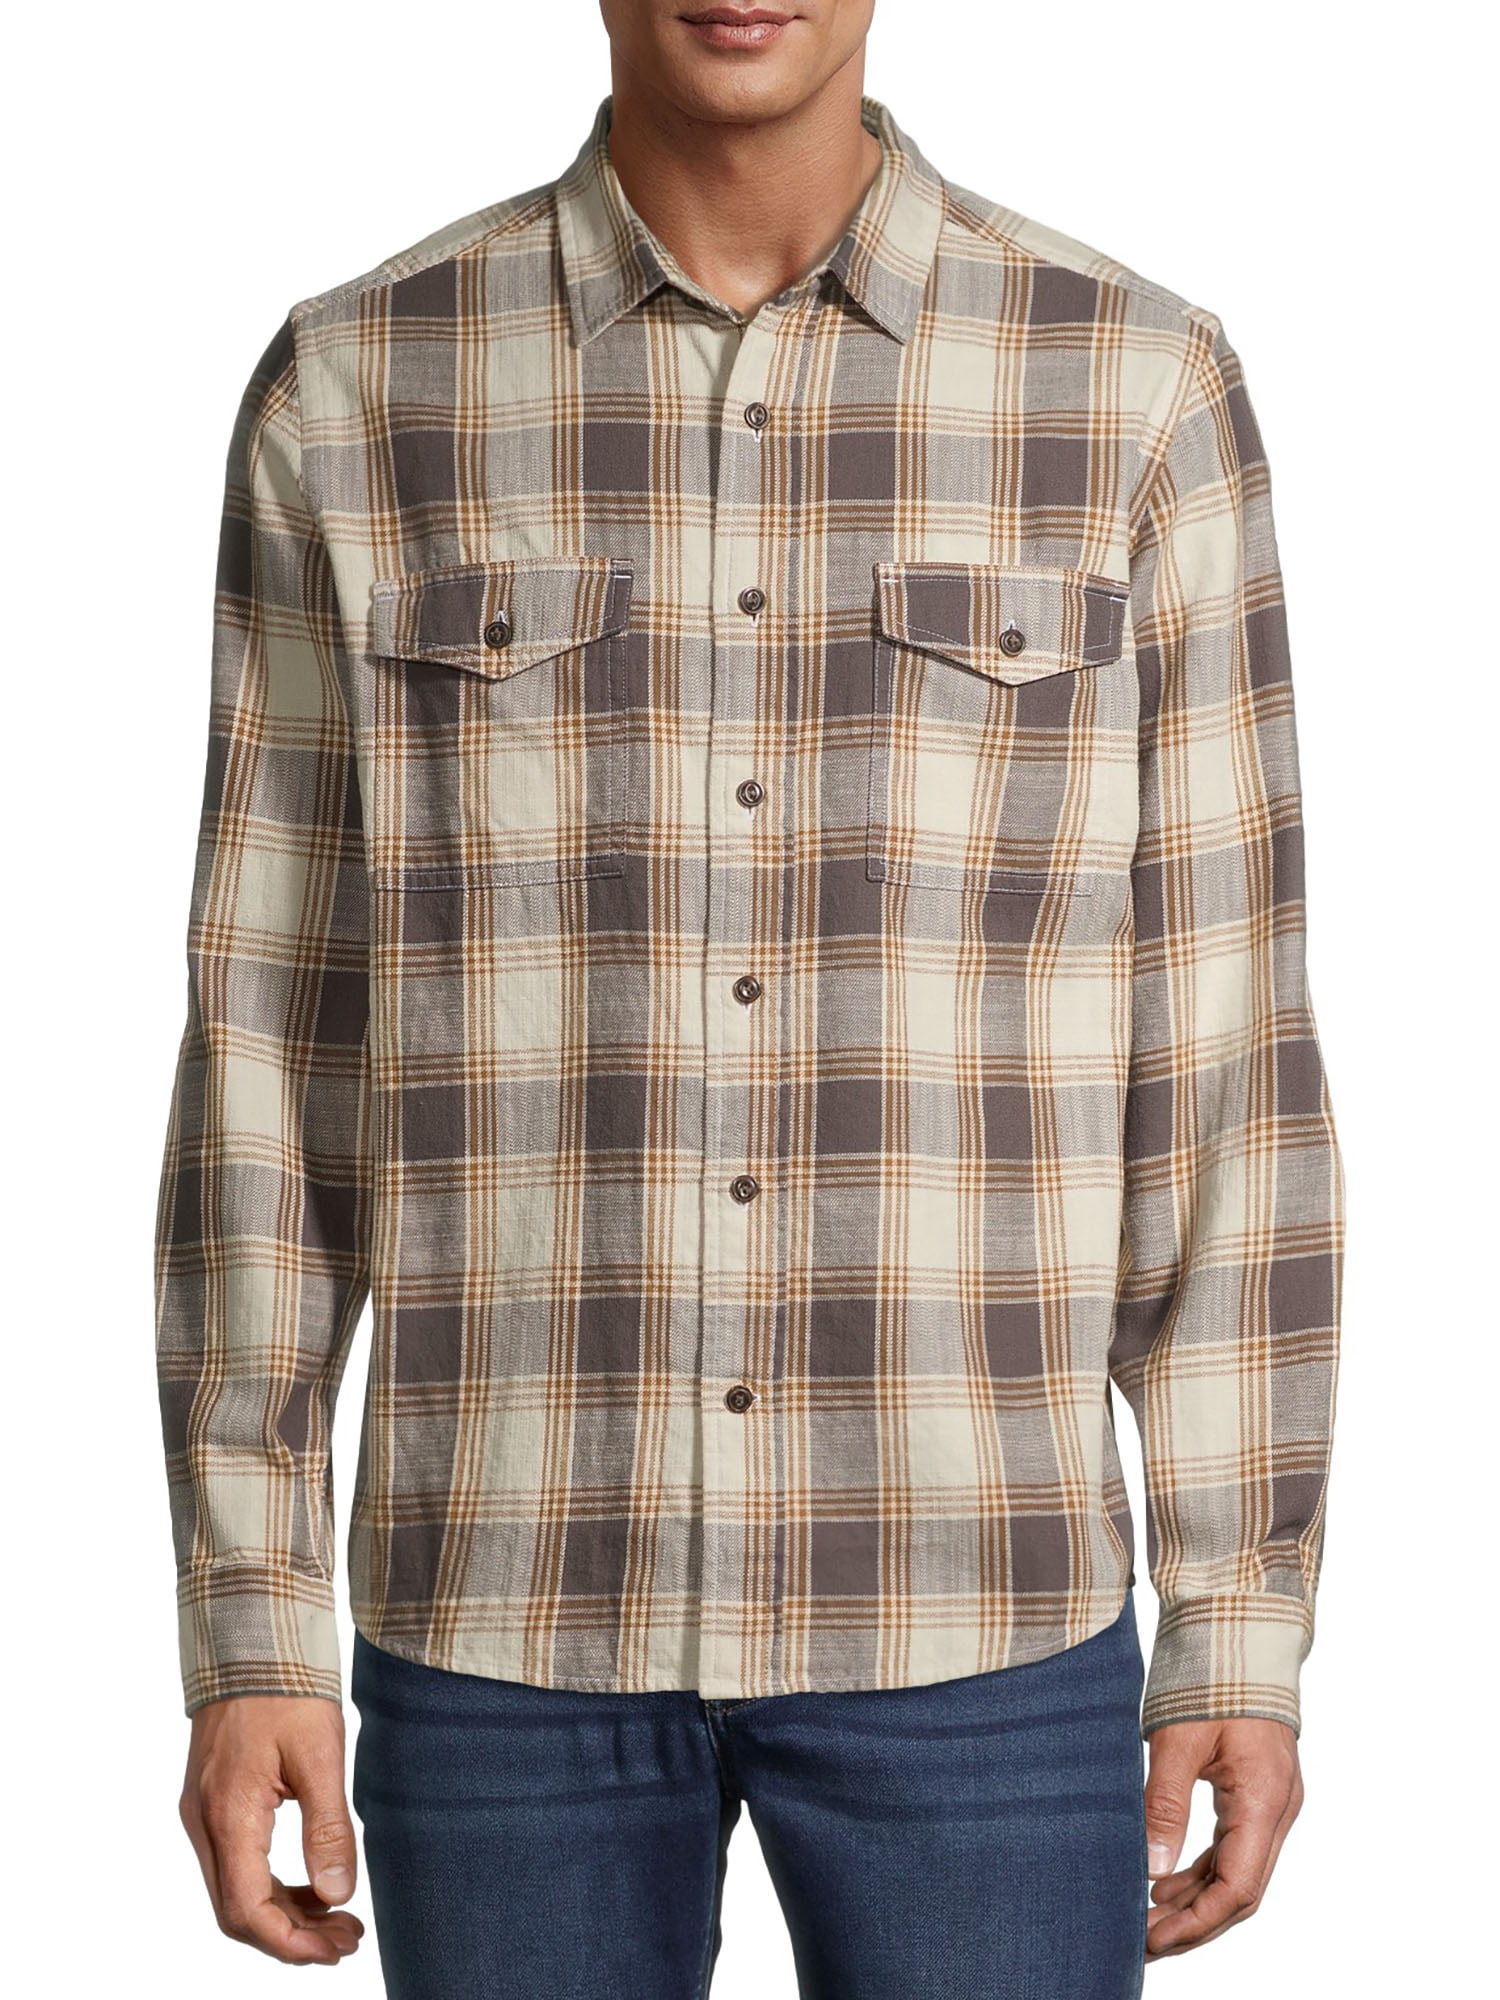 George Men's and Big Men's Textured Plaid Long Sleeve Shirt - Walmart.com